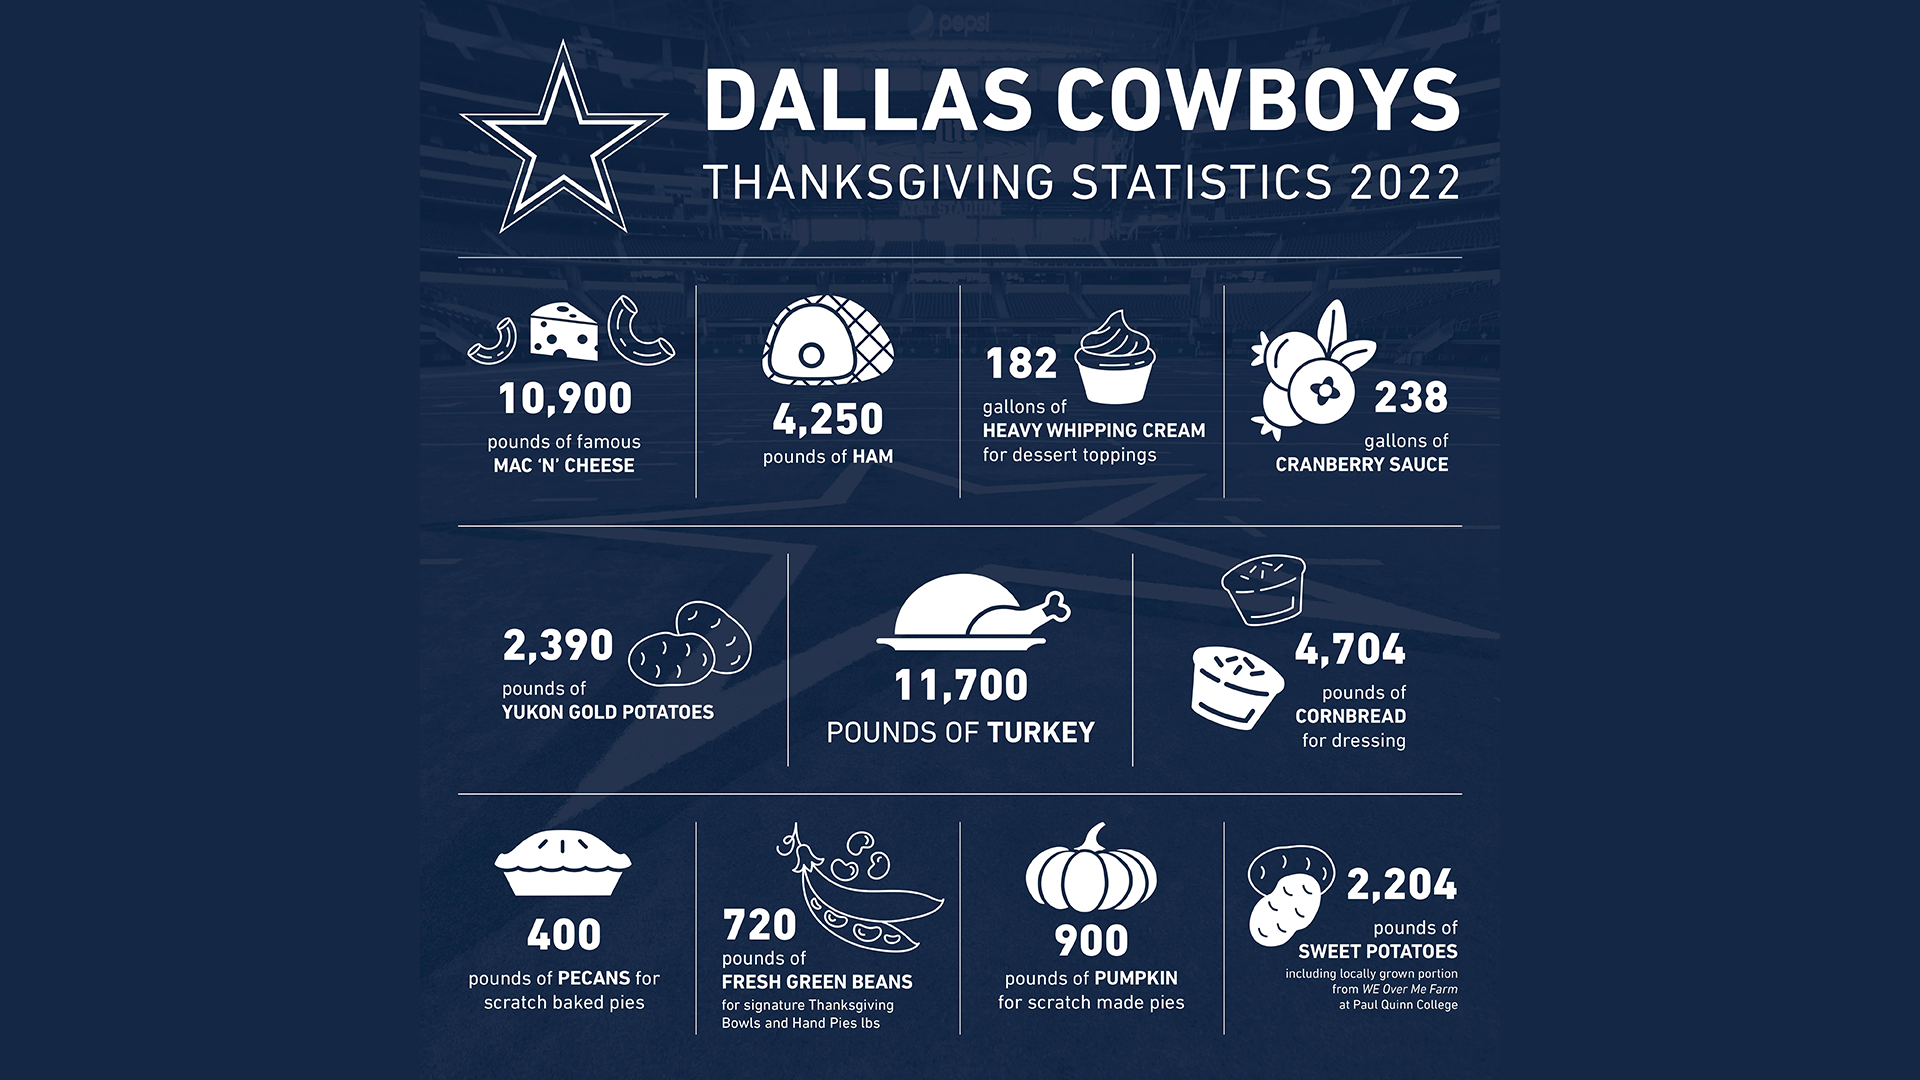 cowboys schedule 2022 thanksgiving